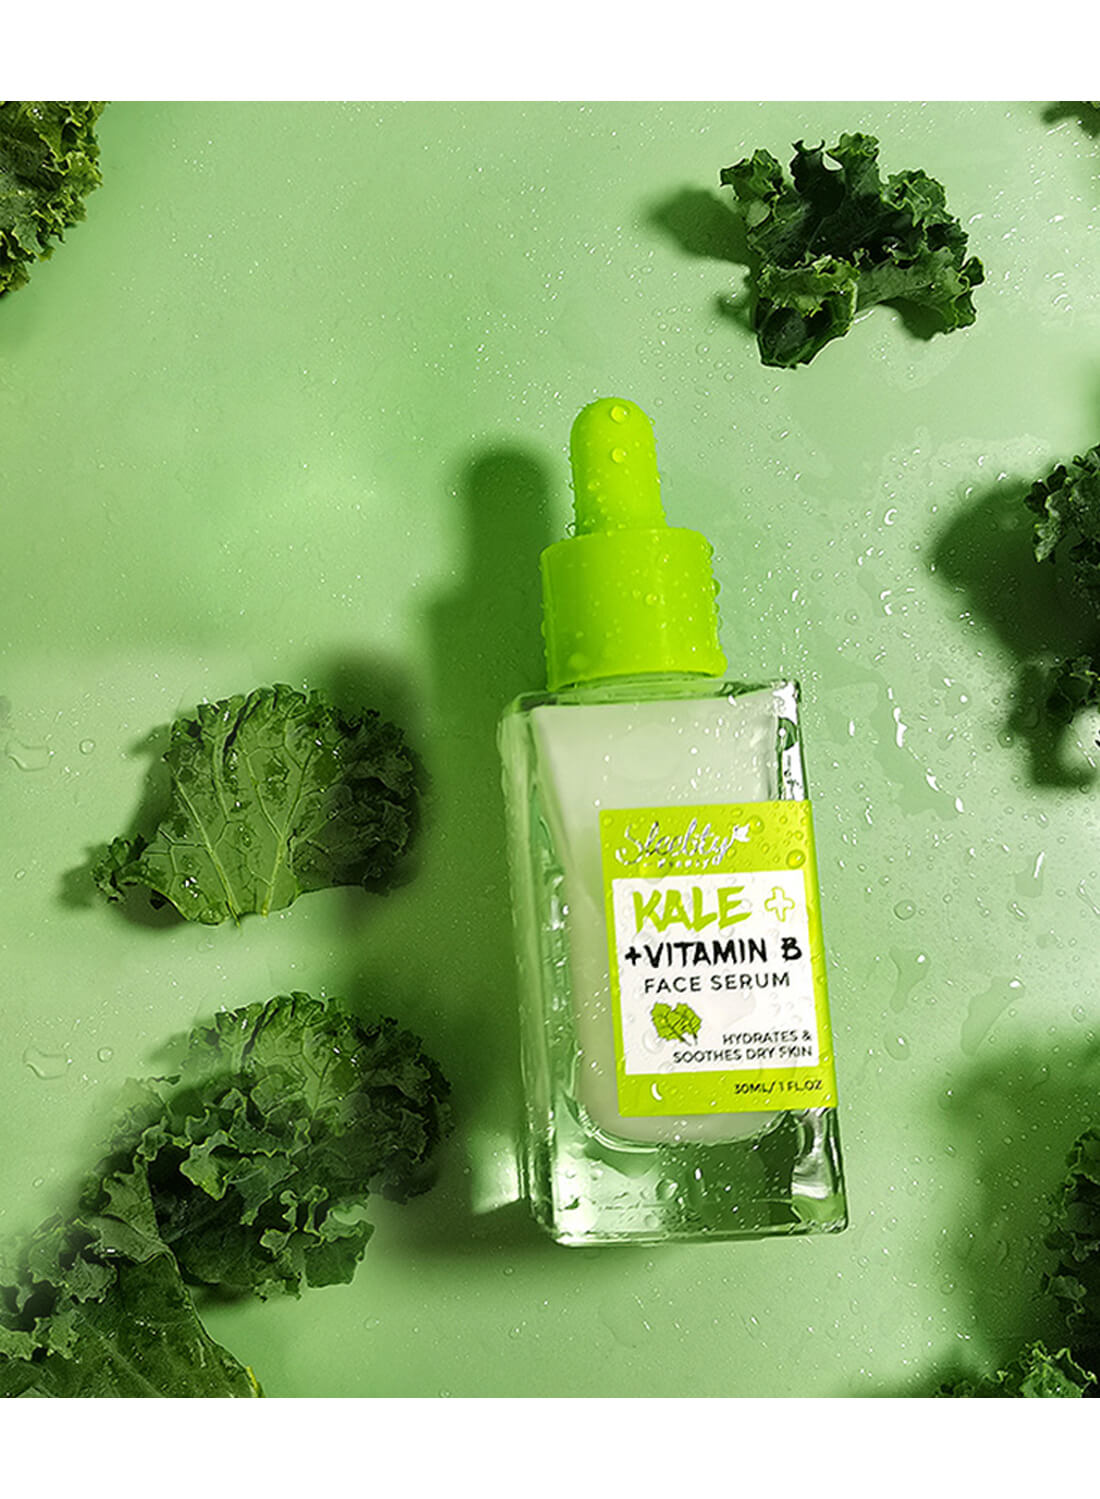 SleeBty Kale +Vitamin B Face Serum